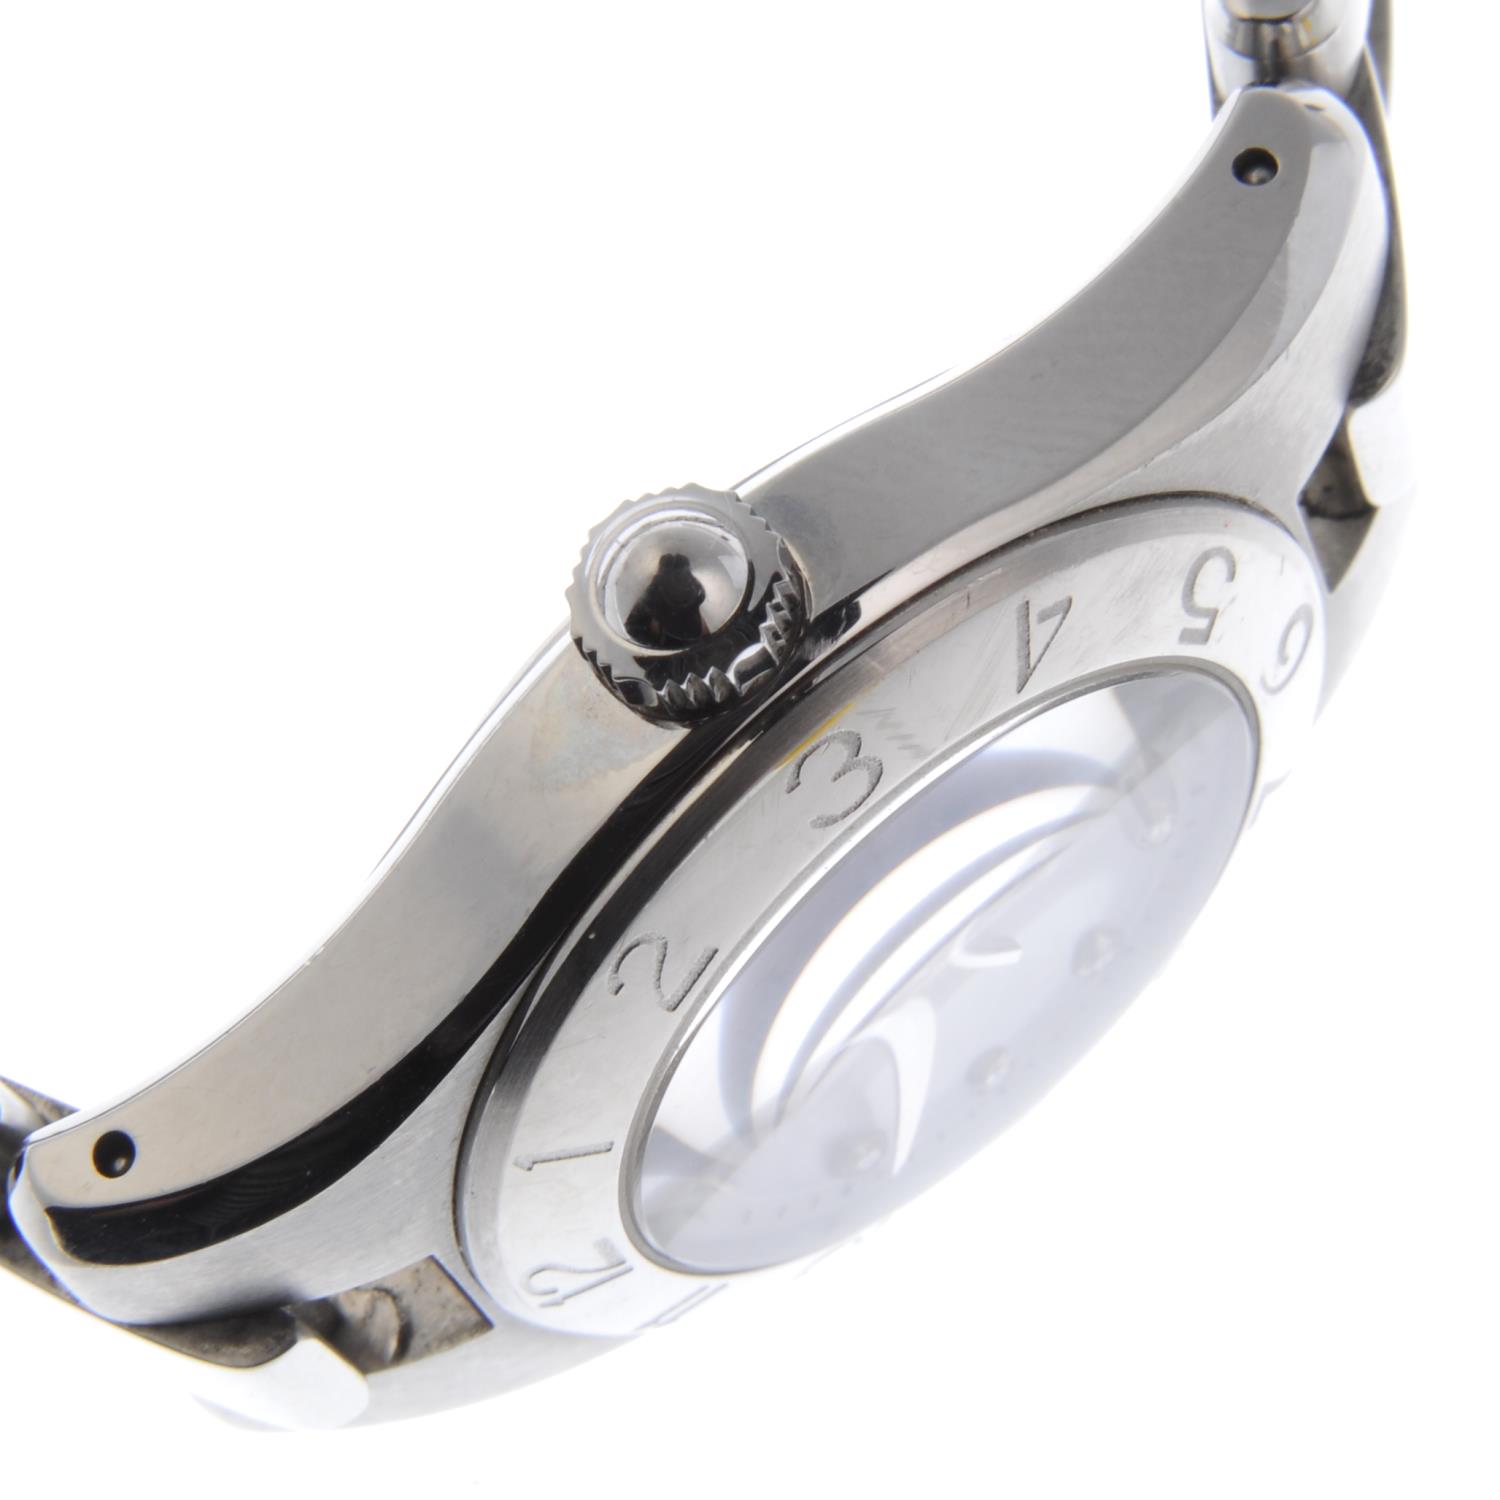 BAUME & MERCIER - a lady's Linea bracelet watch. - Image 3 of 6